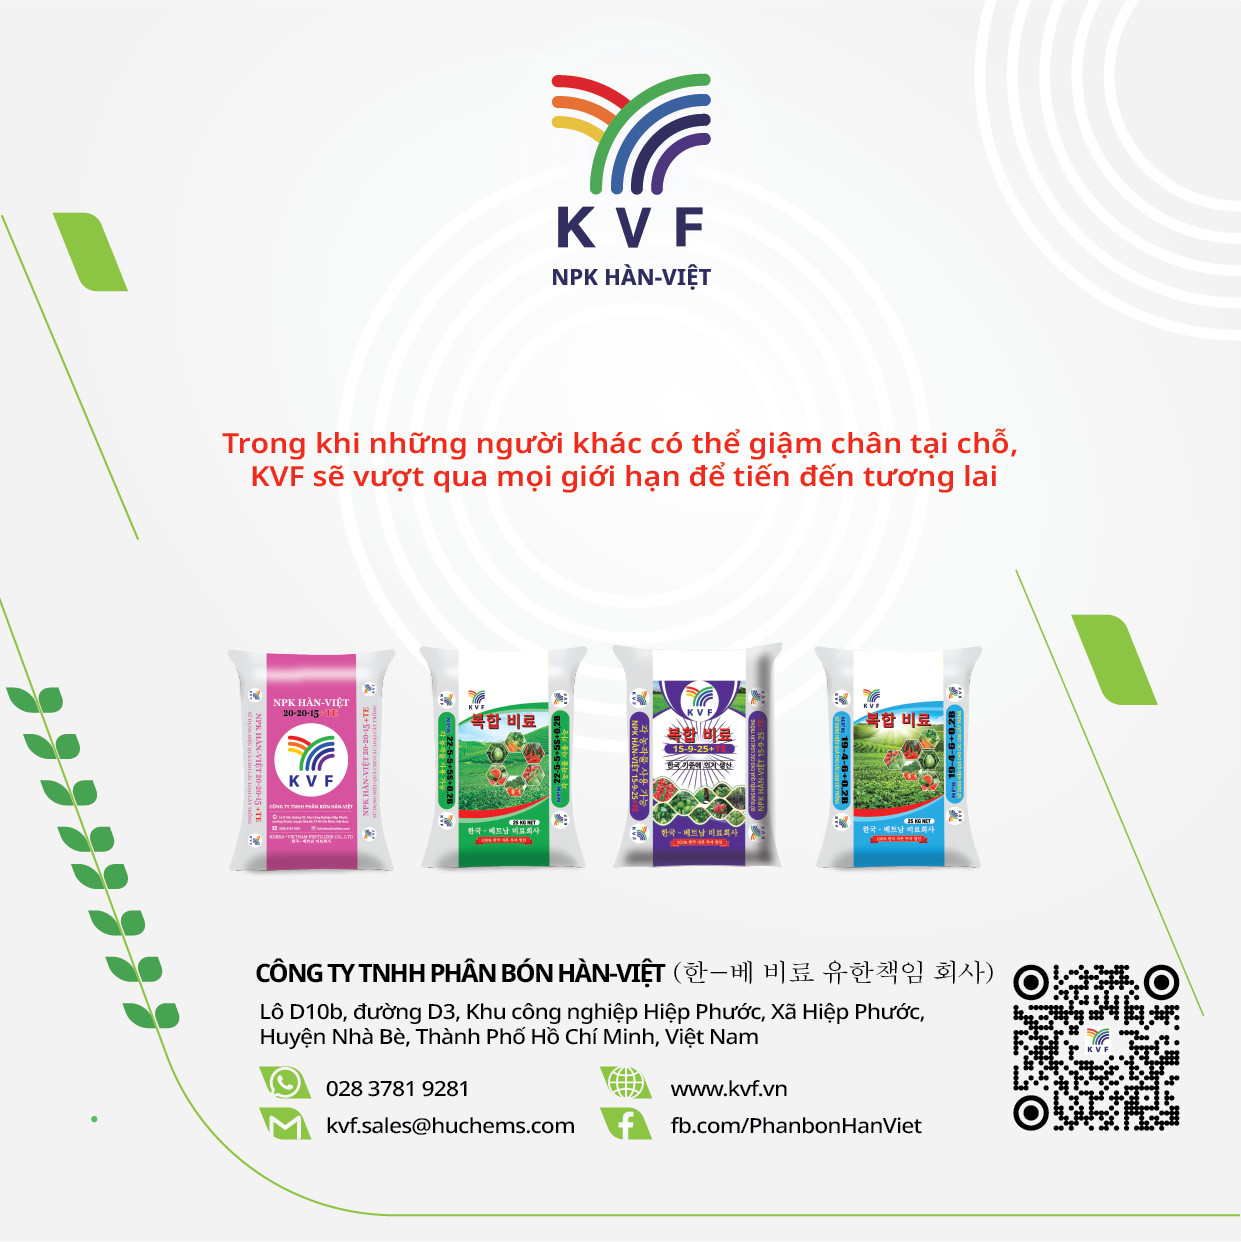 Korean - Vietnamese NPK: Quality makes a brand